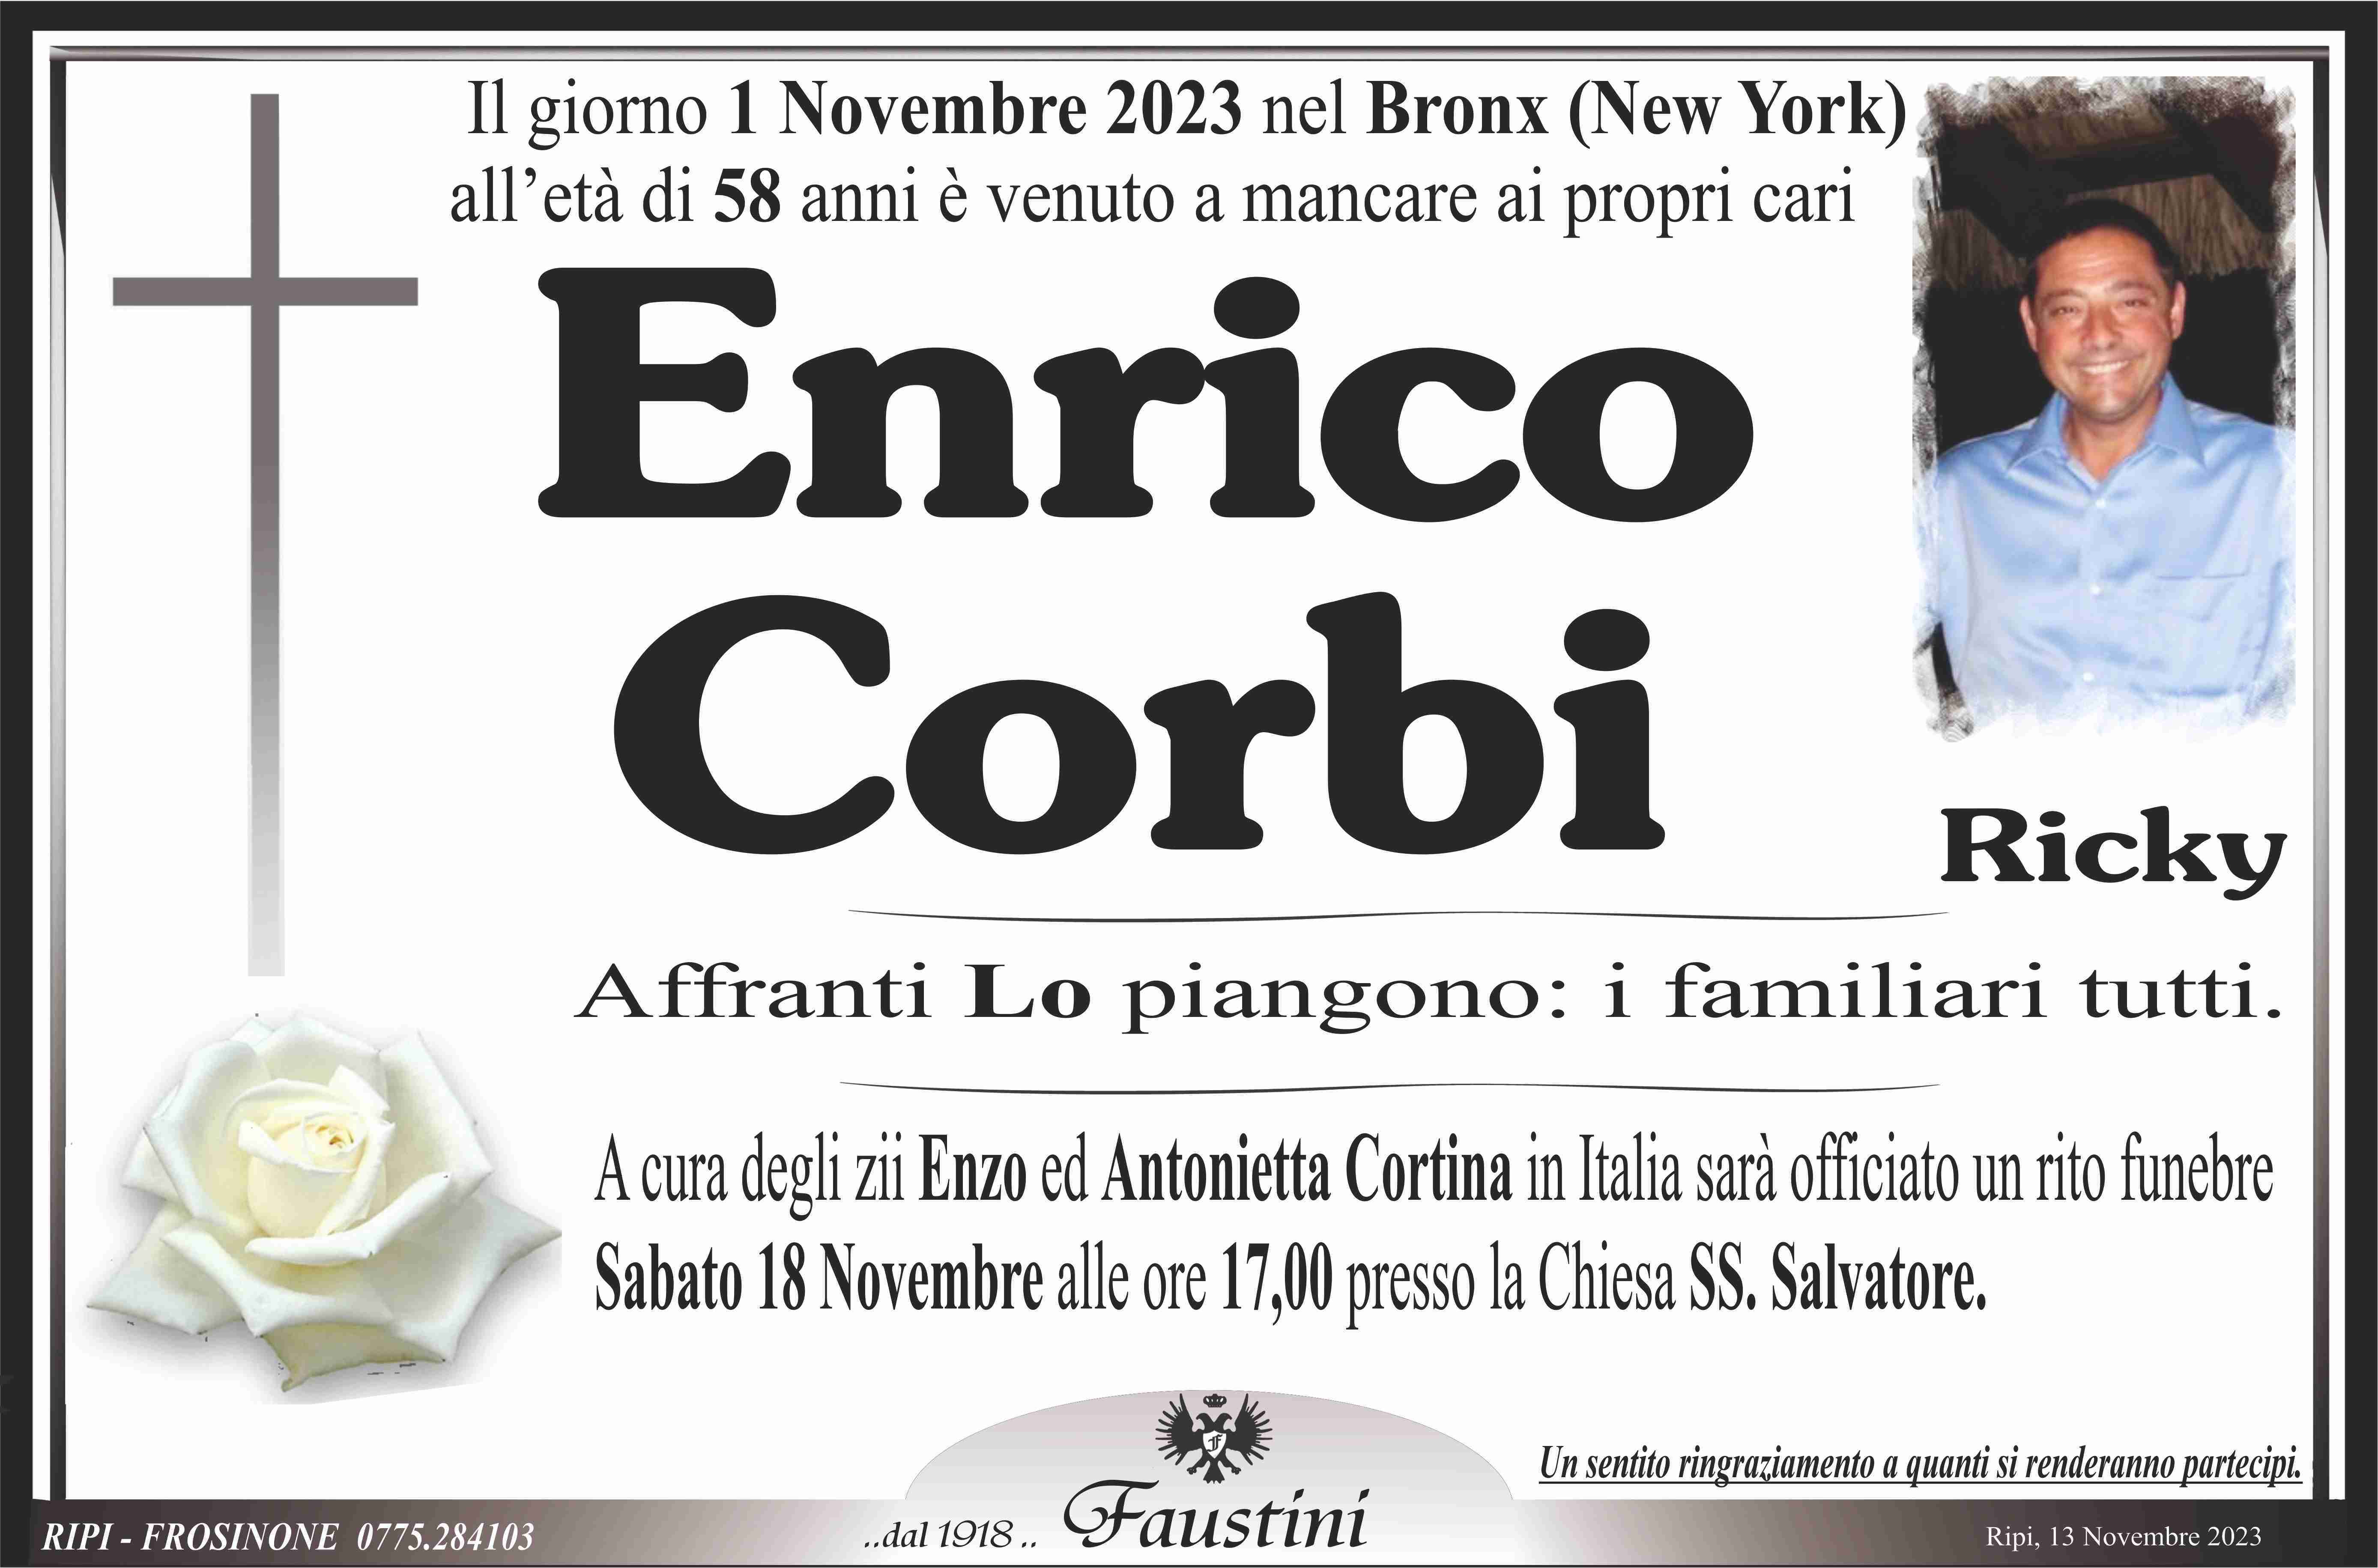 Enrico Corbi